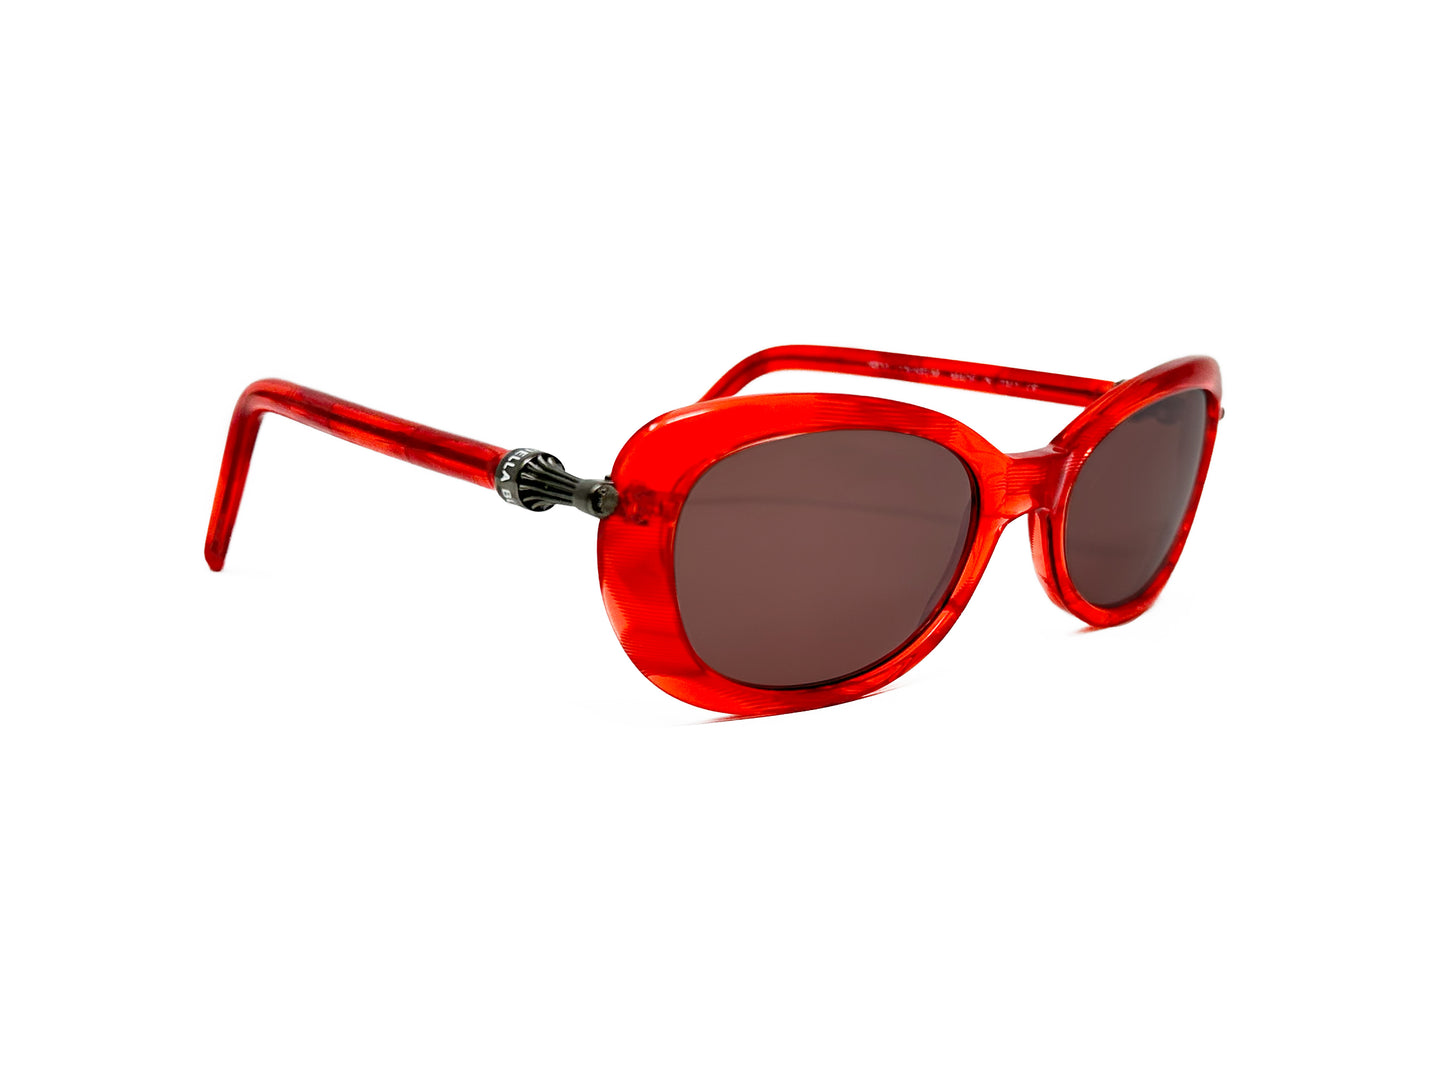 Mariella Burani oval acetate sunglasses. Model: 2000-4. Color: 2 - Semi-transparent red. Side view.